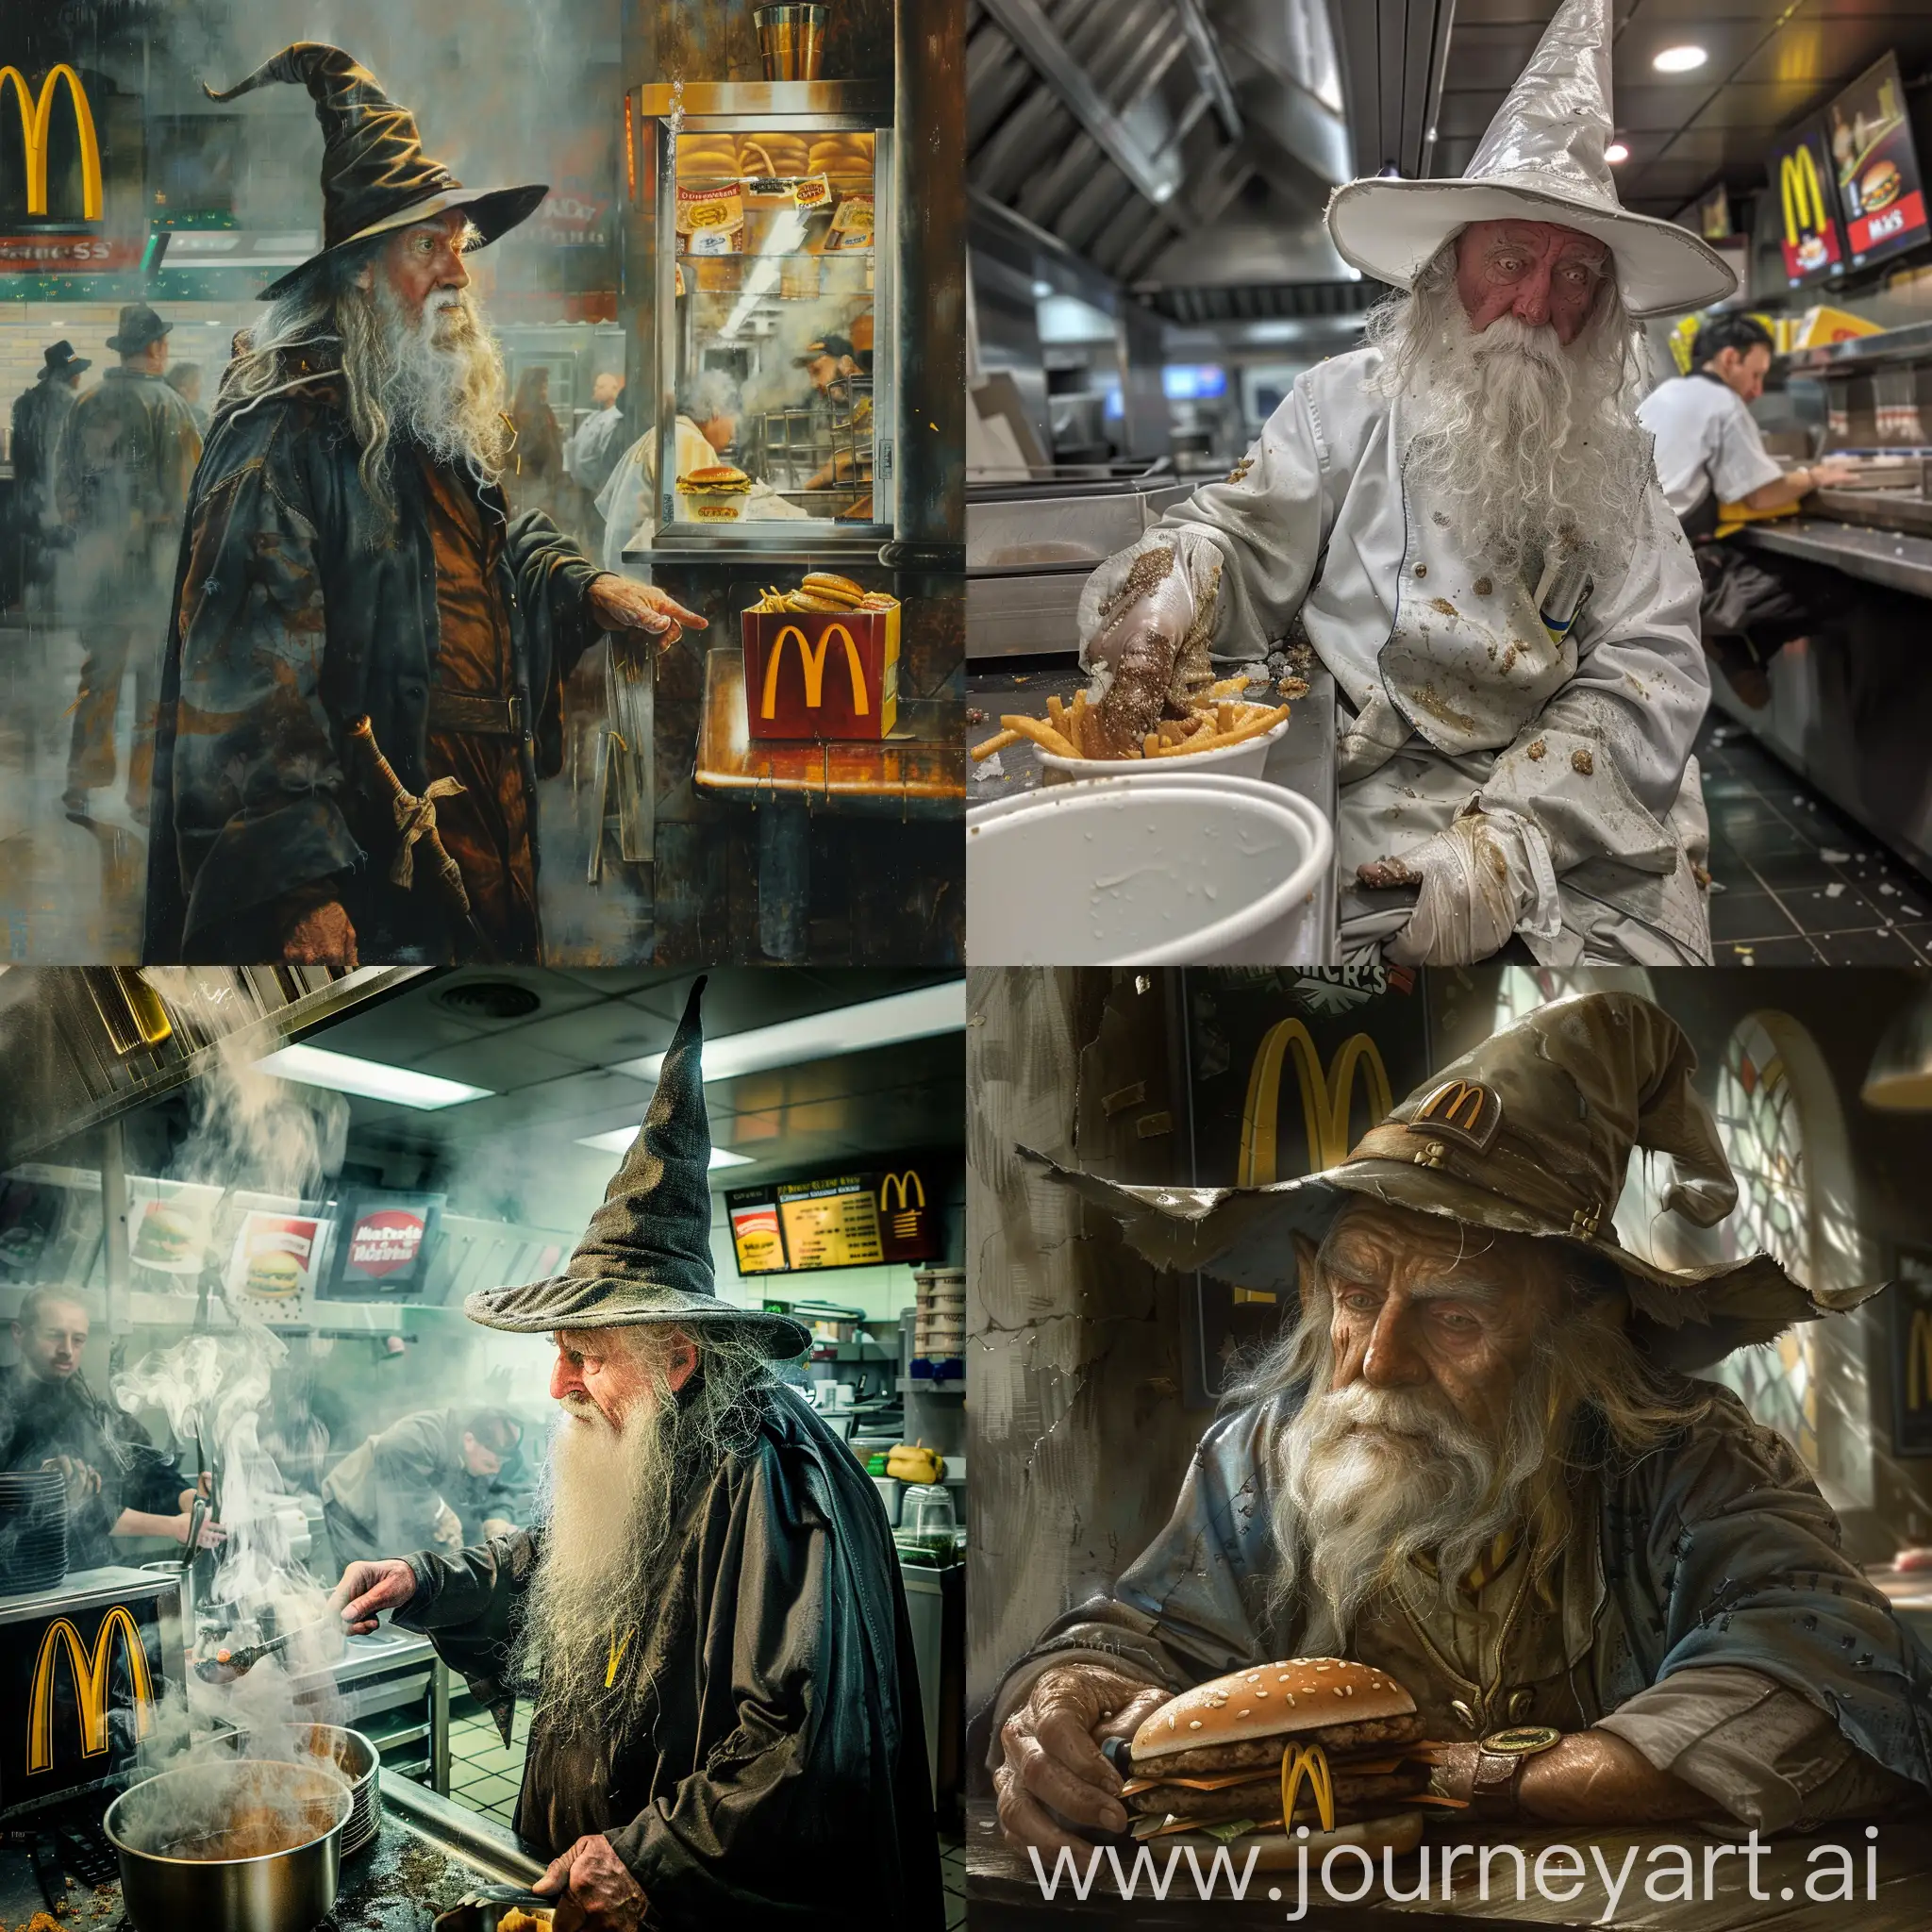 Mischievous-Wizard-Causes-Chaos-in-McDonalds-Kitchen